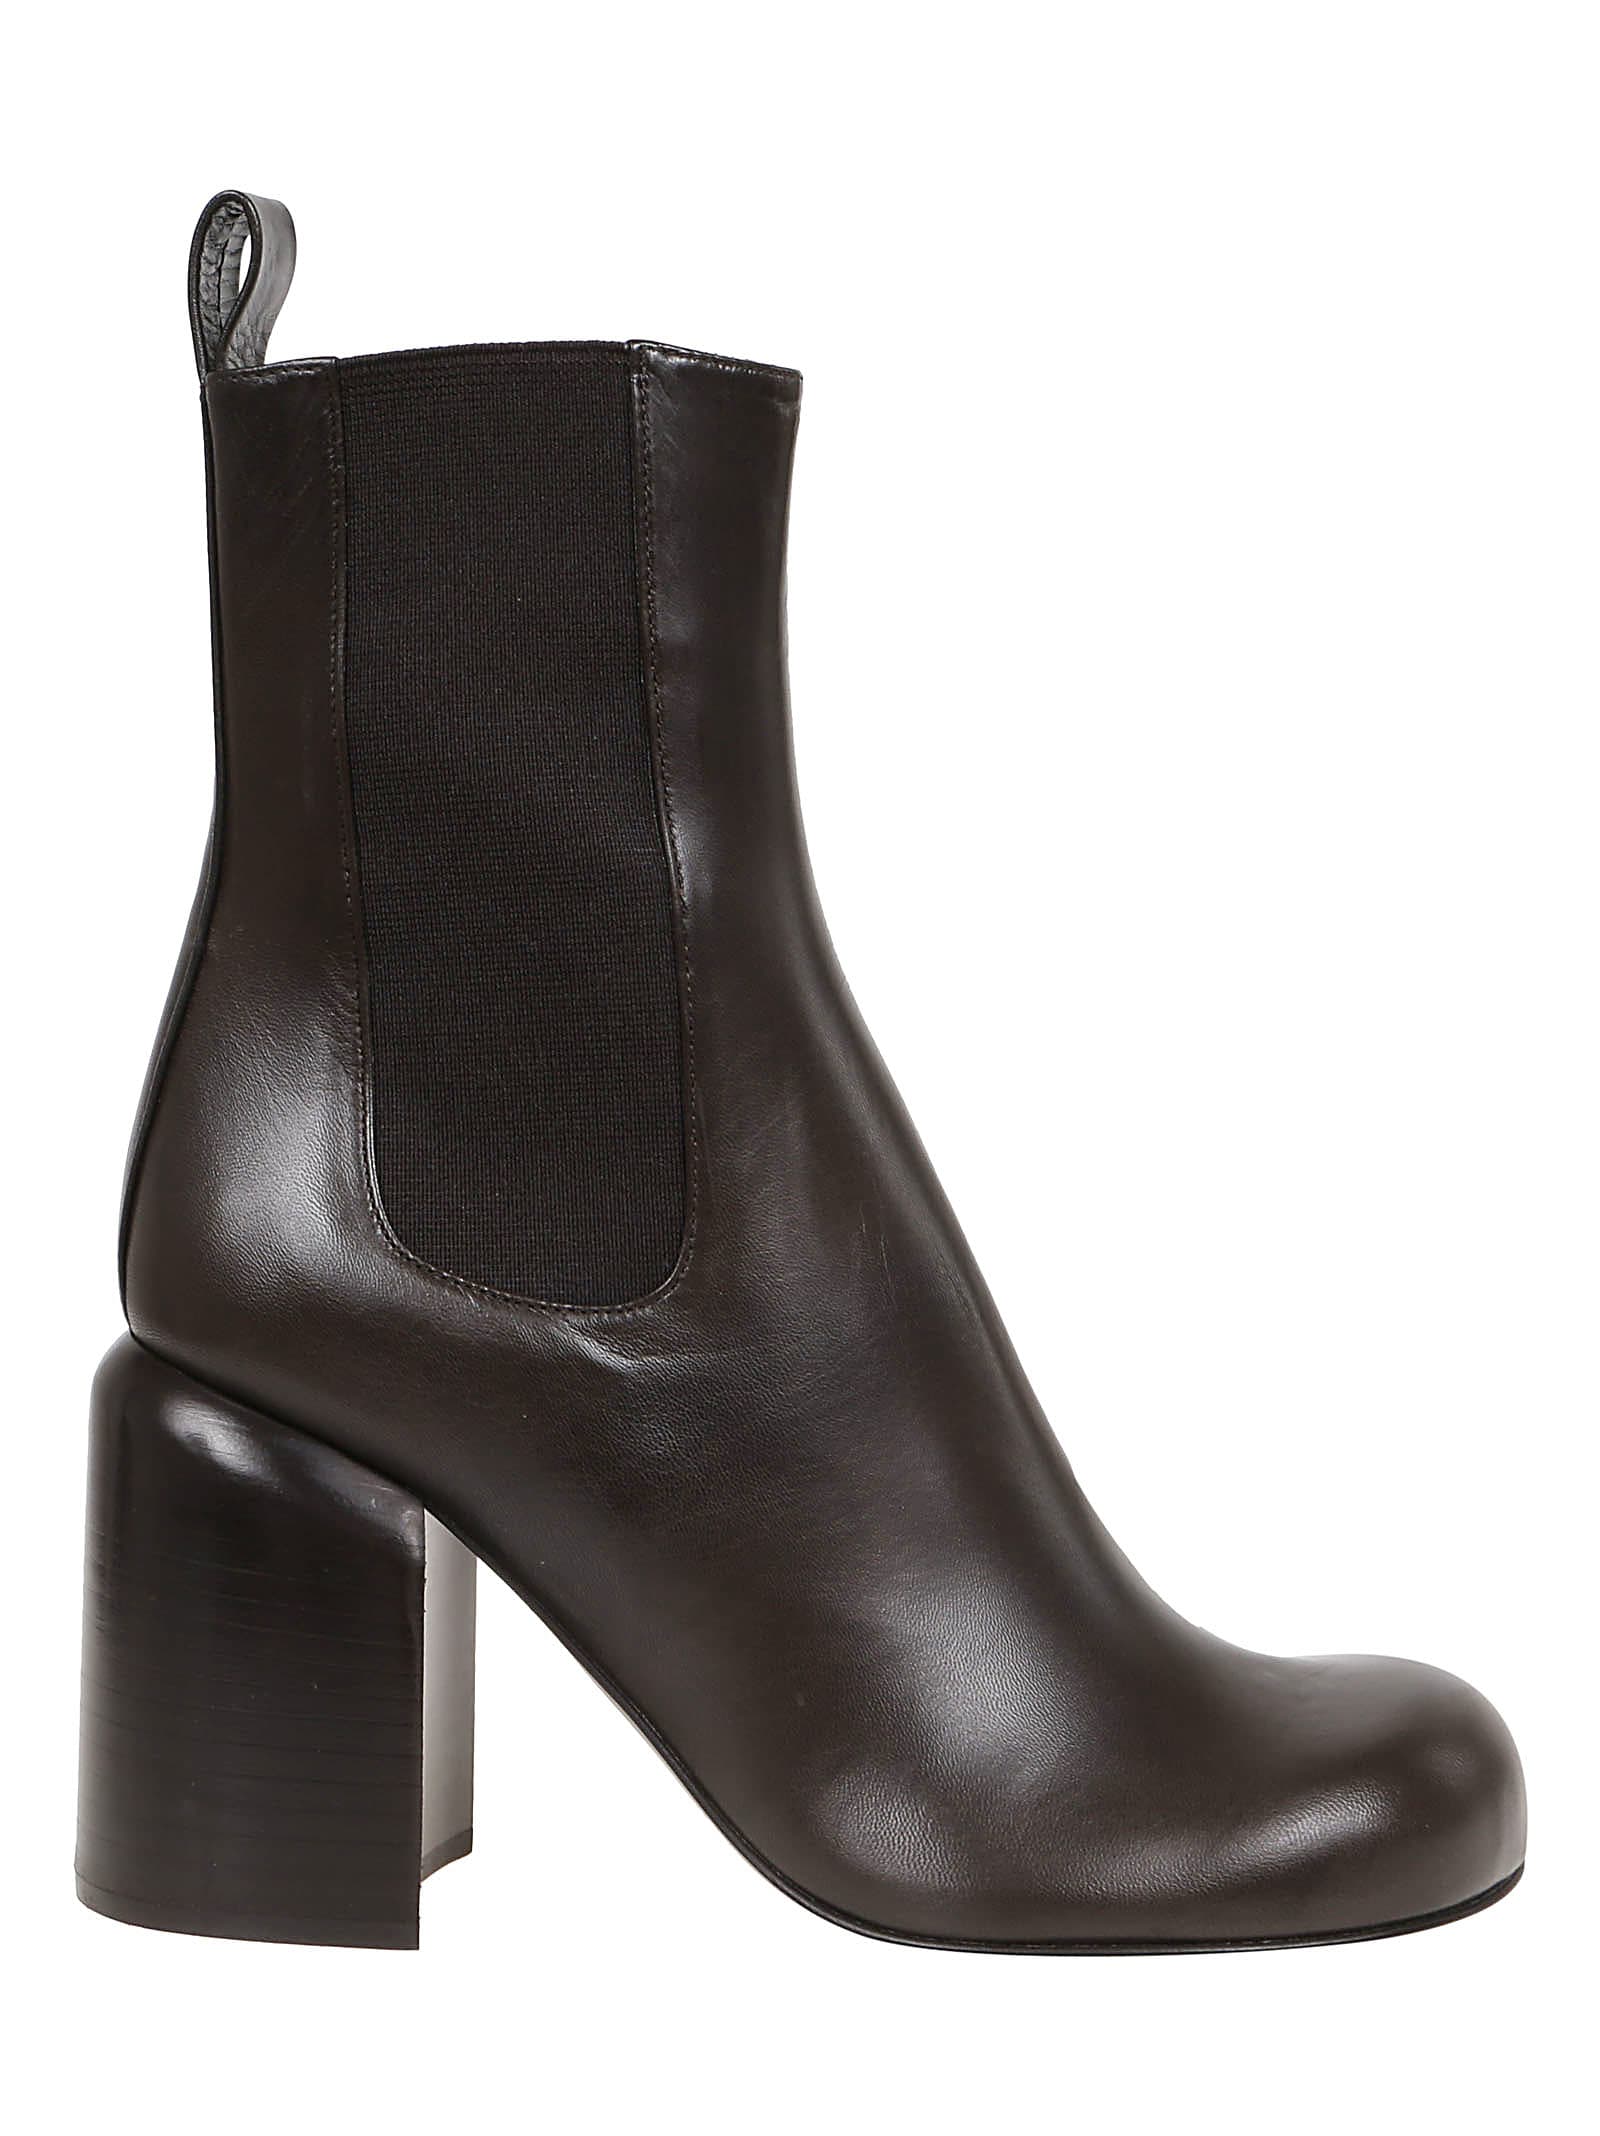 Buy Jil Sander Ankle Boot - Tripon 545 Moka online, shop Jil Sander shoes with free shipping